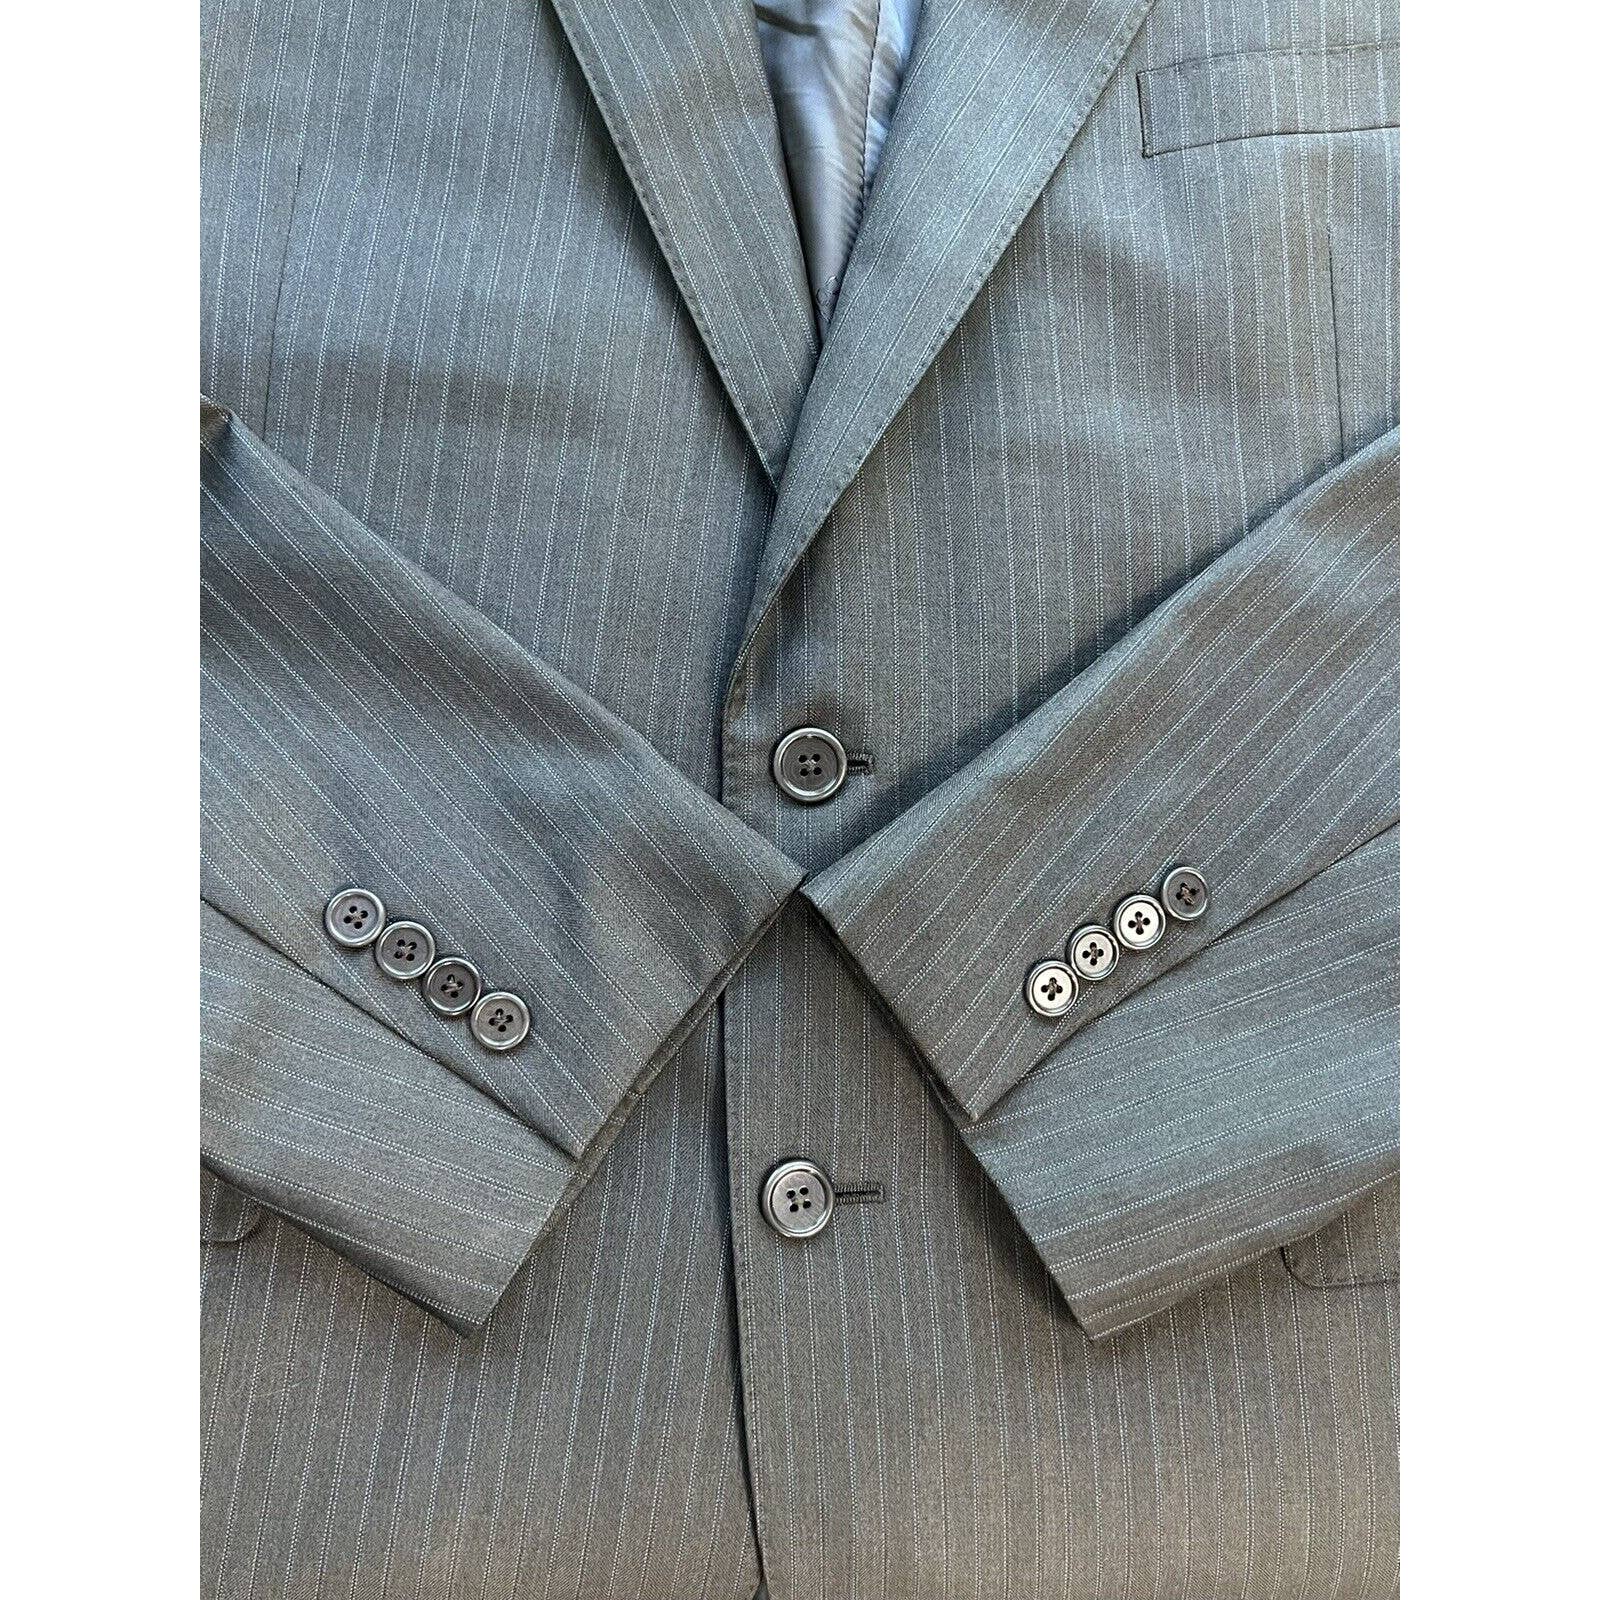 Jos A Bank Signature Gold 2 Button Suit Jacket Men’s 43R Wool Brown Pinstripe